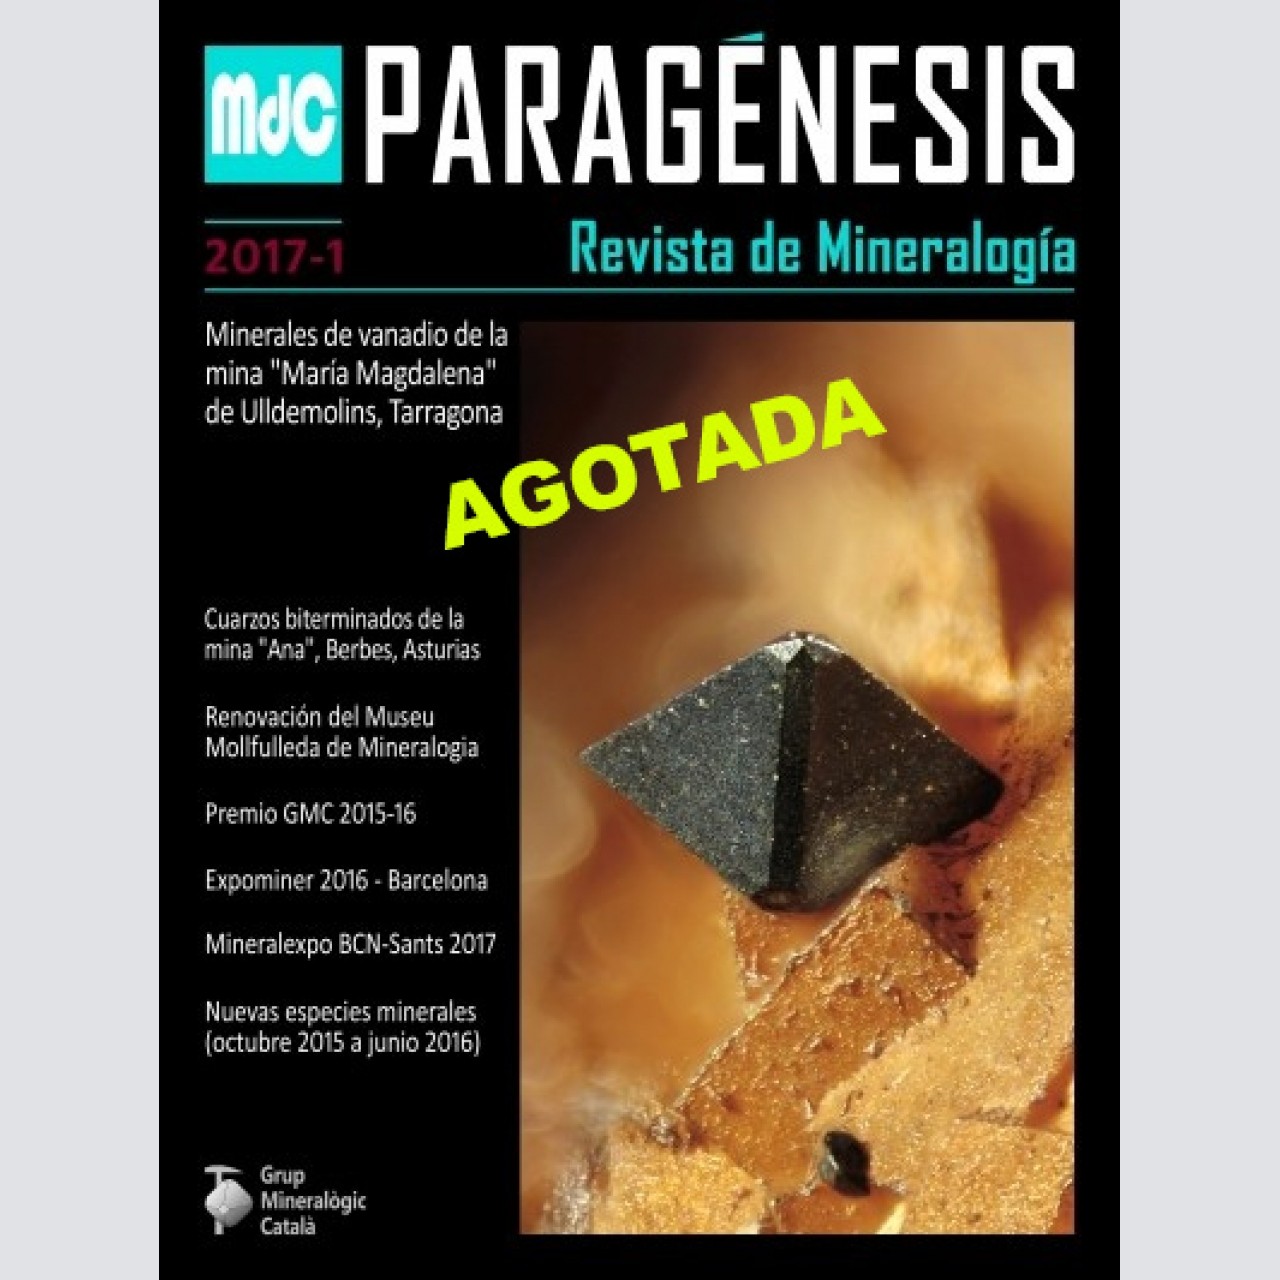 Paragénesis. Revista de Mineralogía (2017-1)